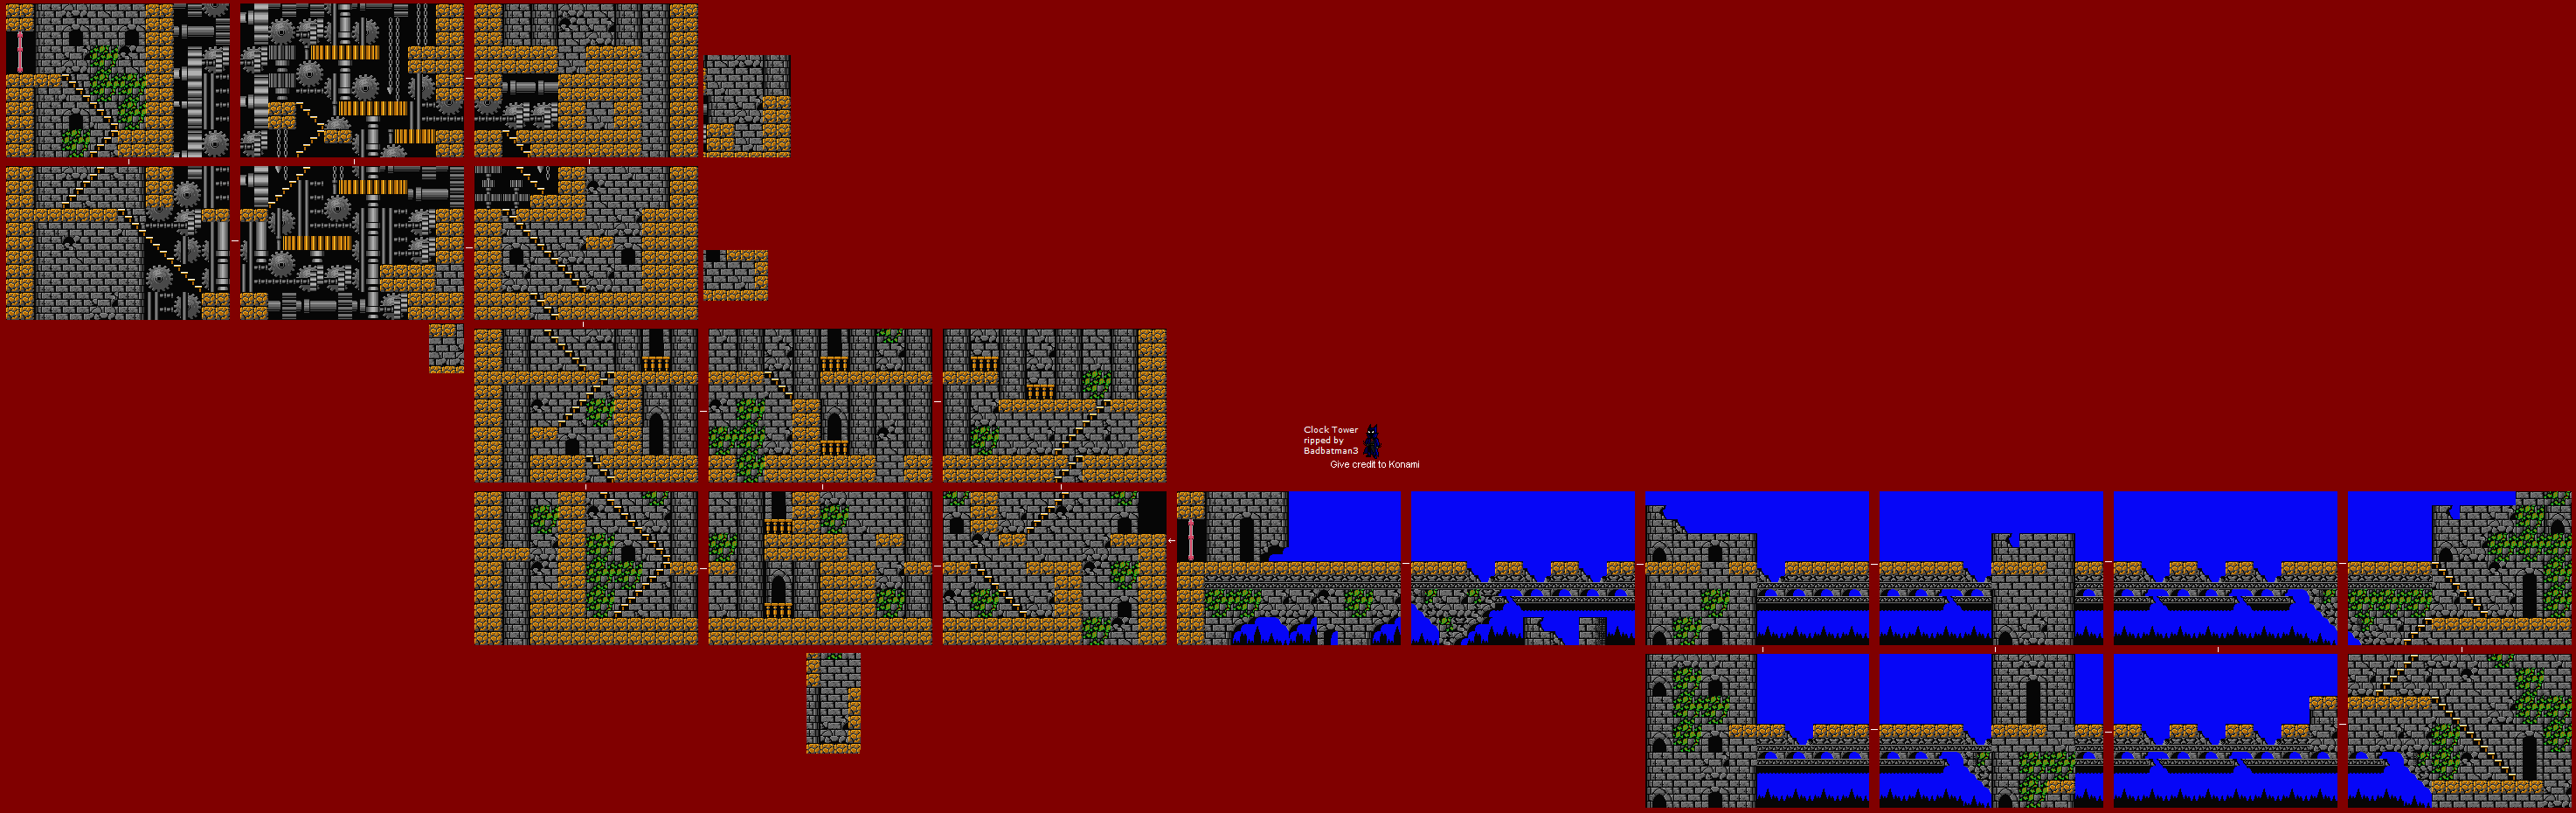 Vampire Killer (MSX2) - Stage 6: Clock Tower